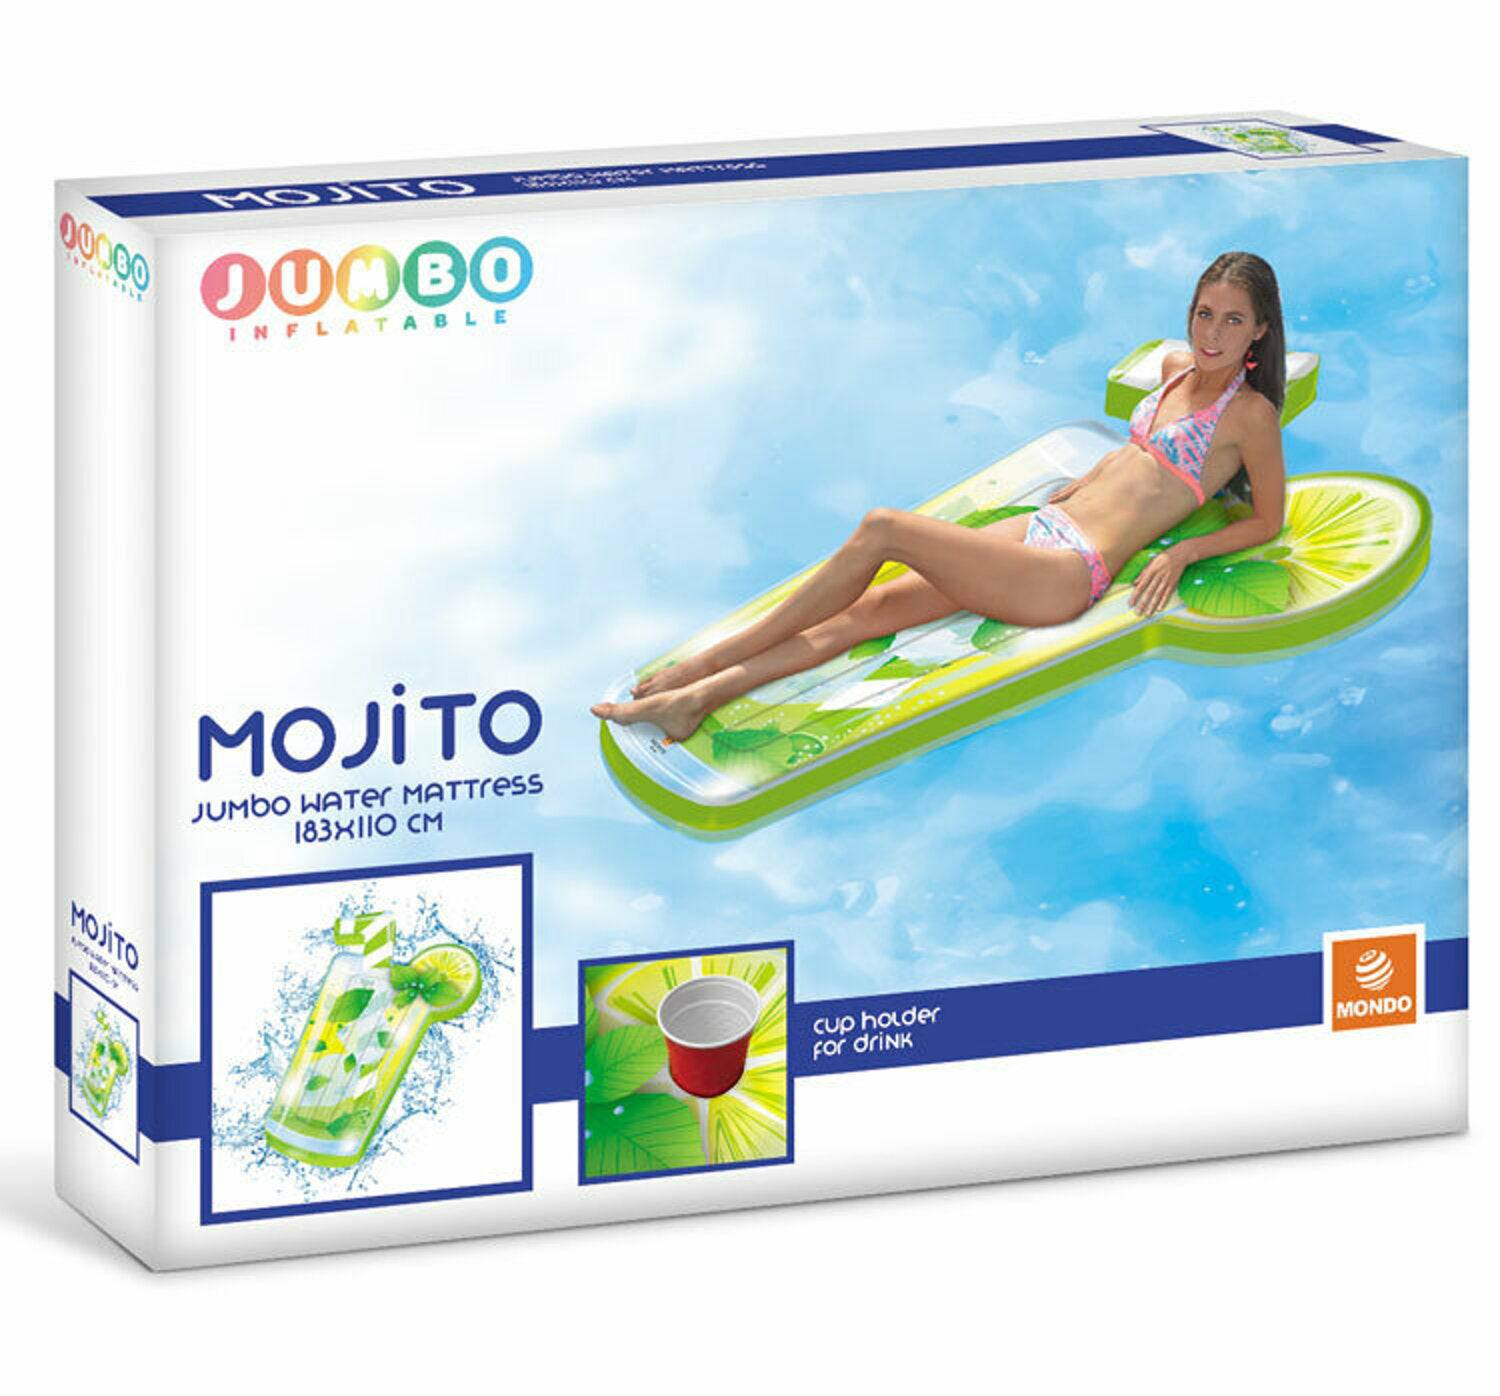 Jumbo Water Matress Mondo Mojito - Albagame